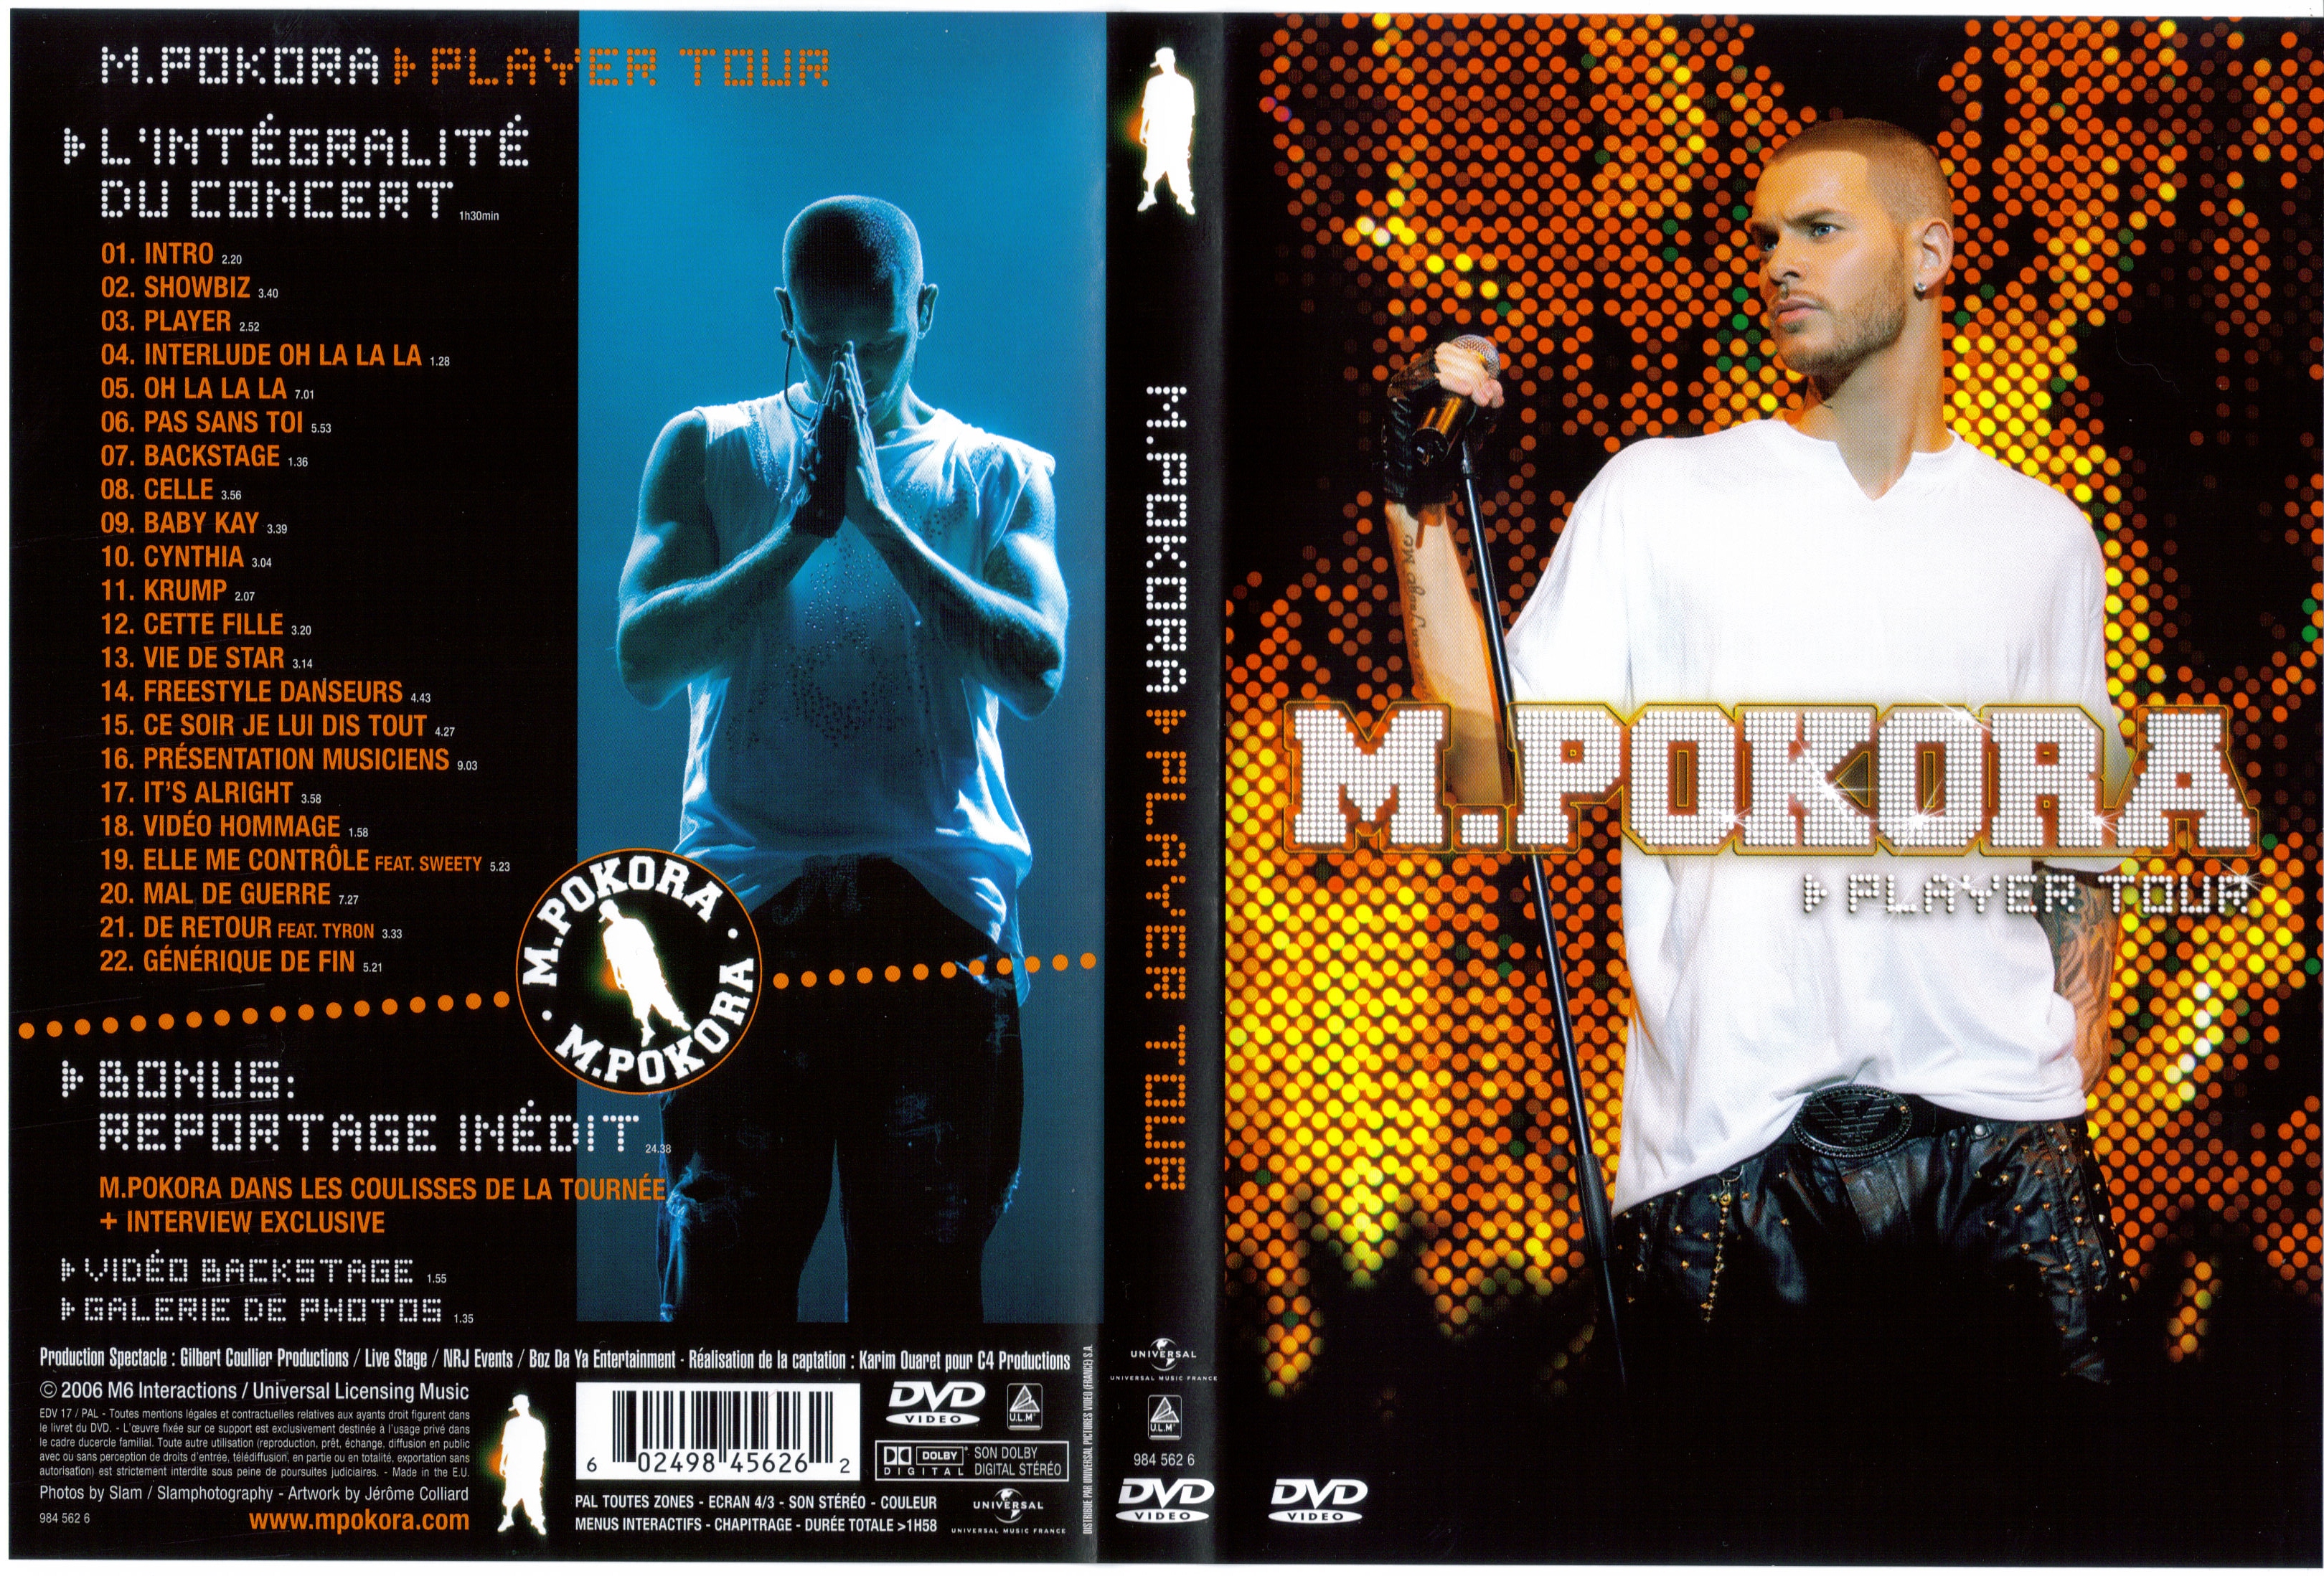 Jaquette DVD M Pokora player tour